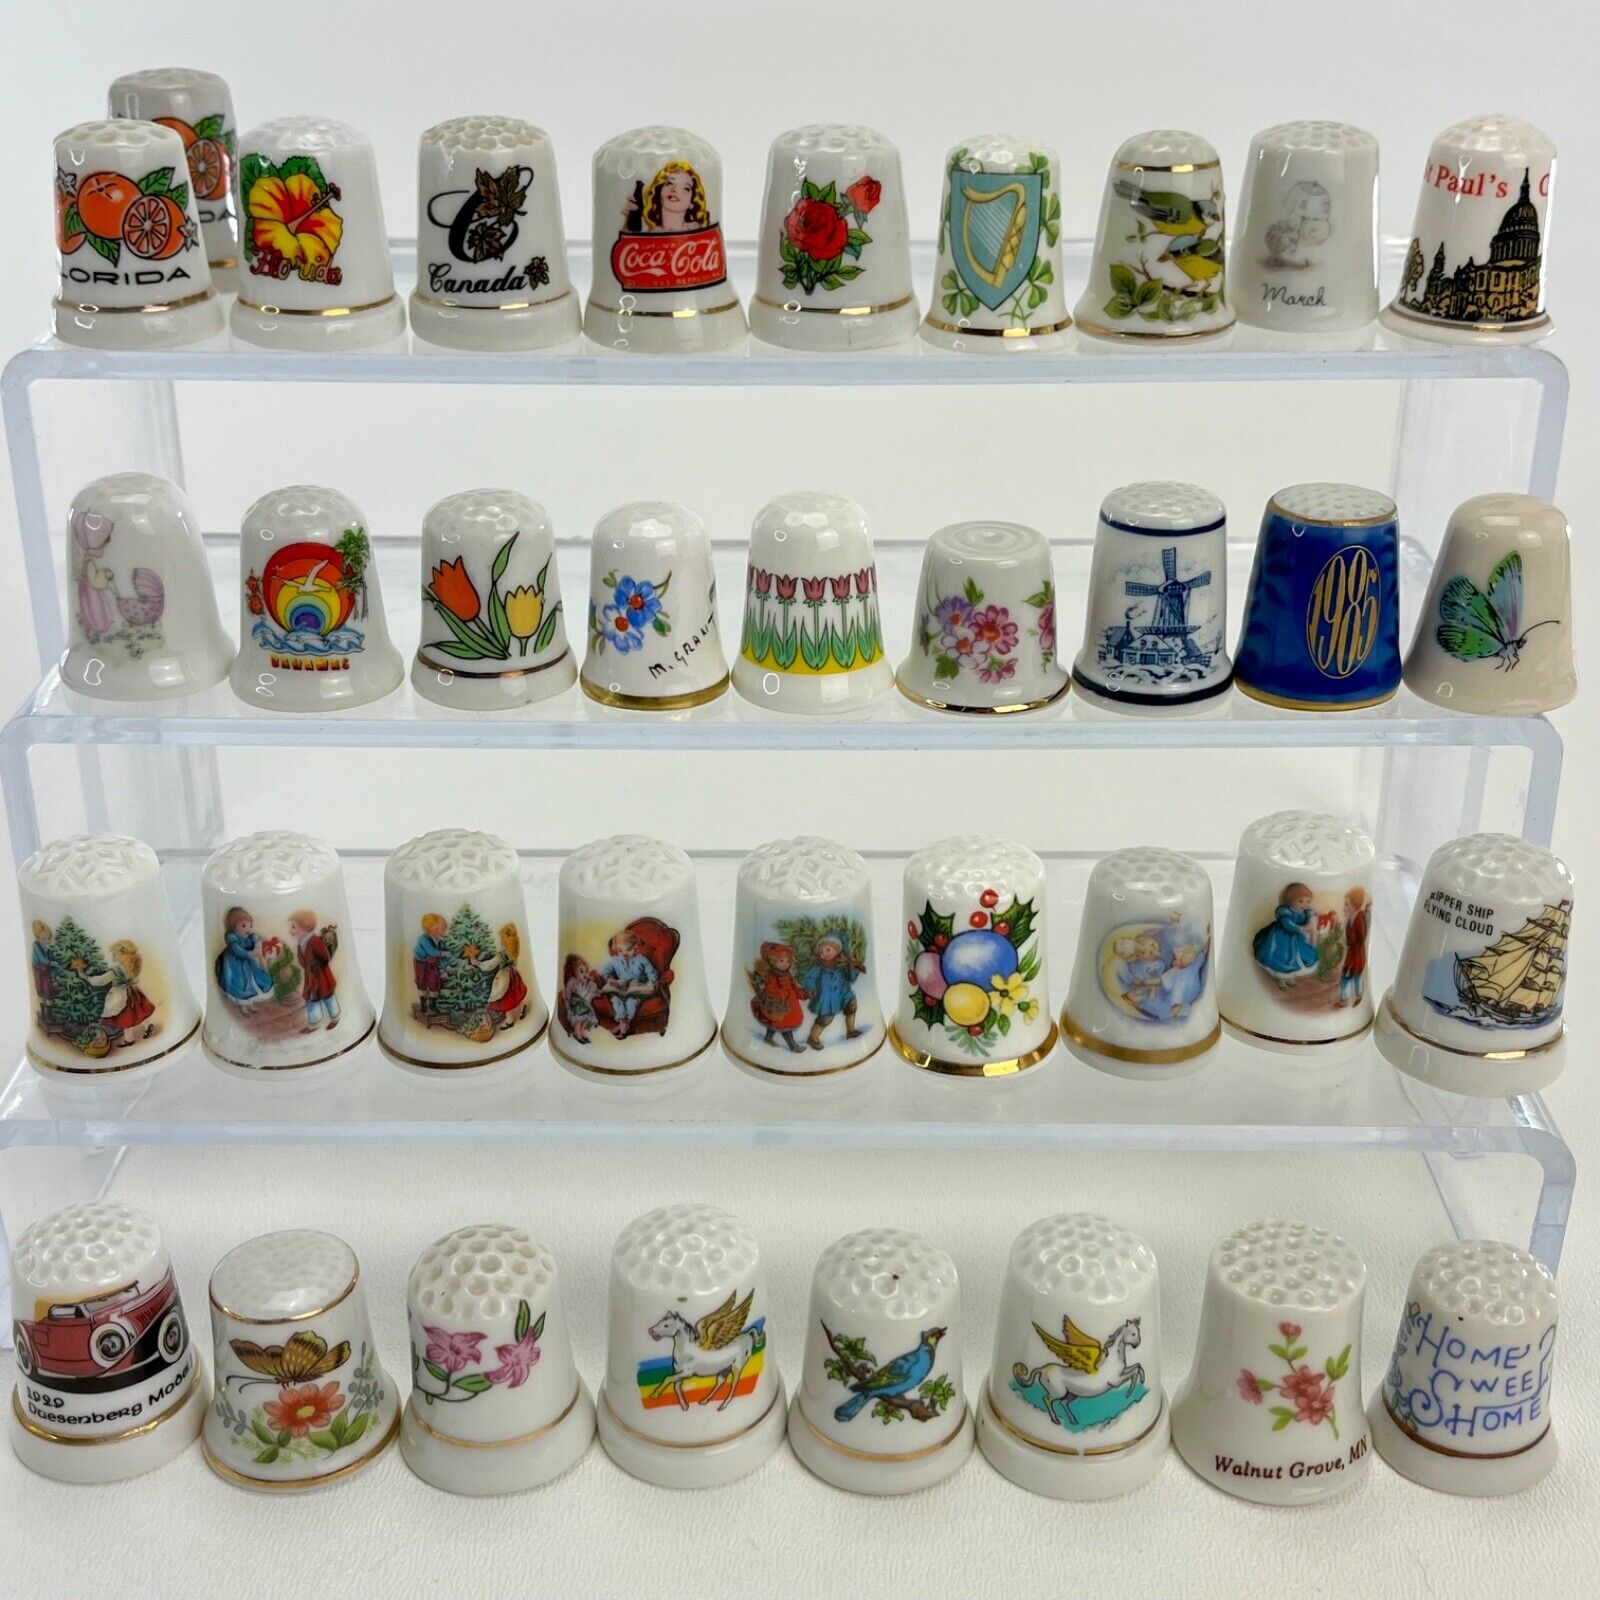 Vintage Porcelain Sewing Thimble Lot of 36 Mixed Fenton Mosa Schmid Caversall